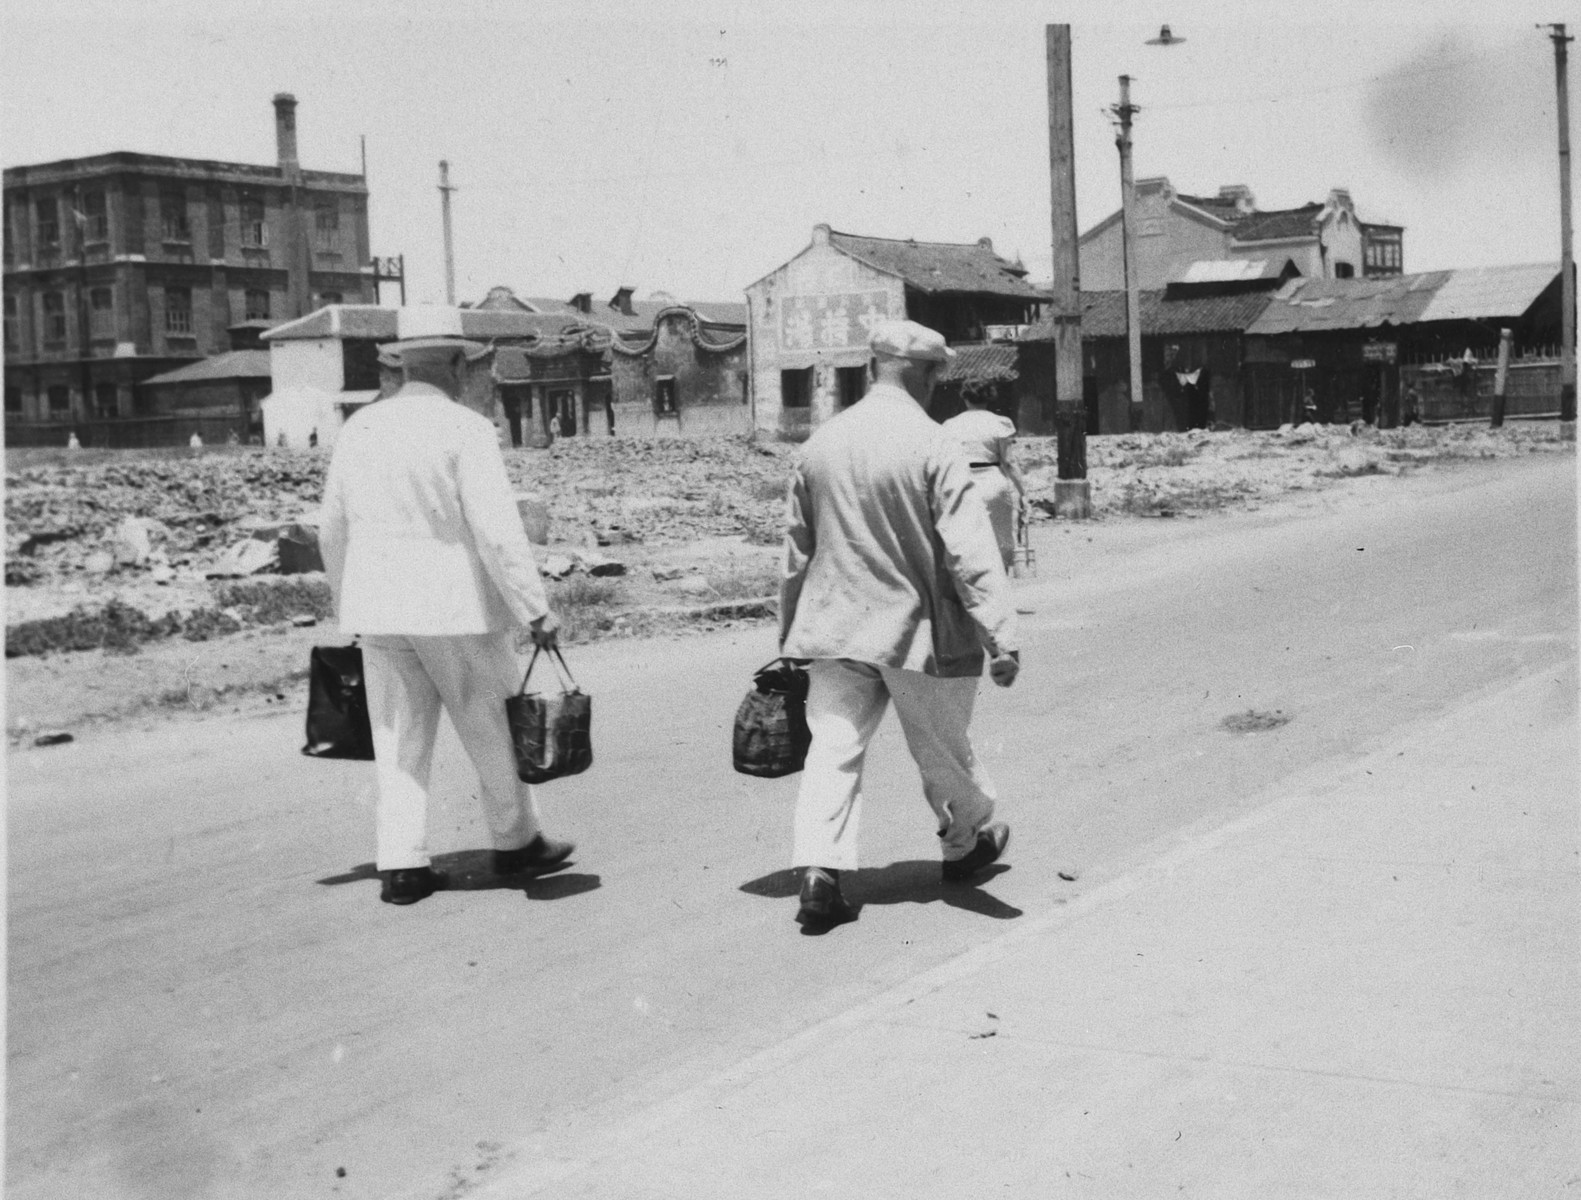 Two men walk down a street in Shanghai carrying packages of food. 

The original caption reads "Das Essen wird nach Hause getragen."